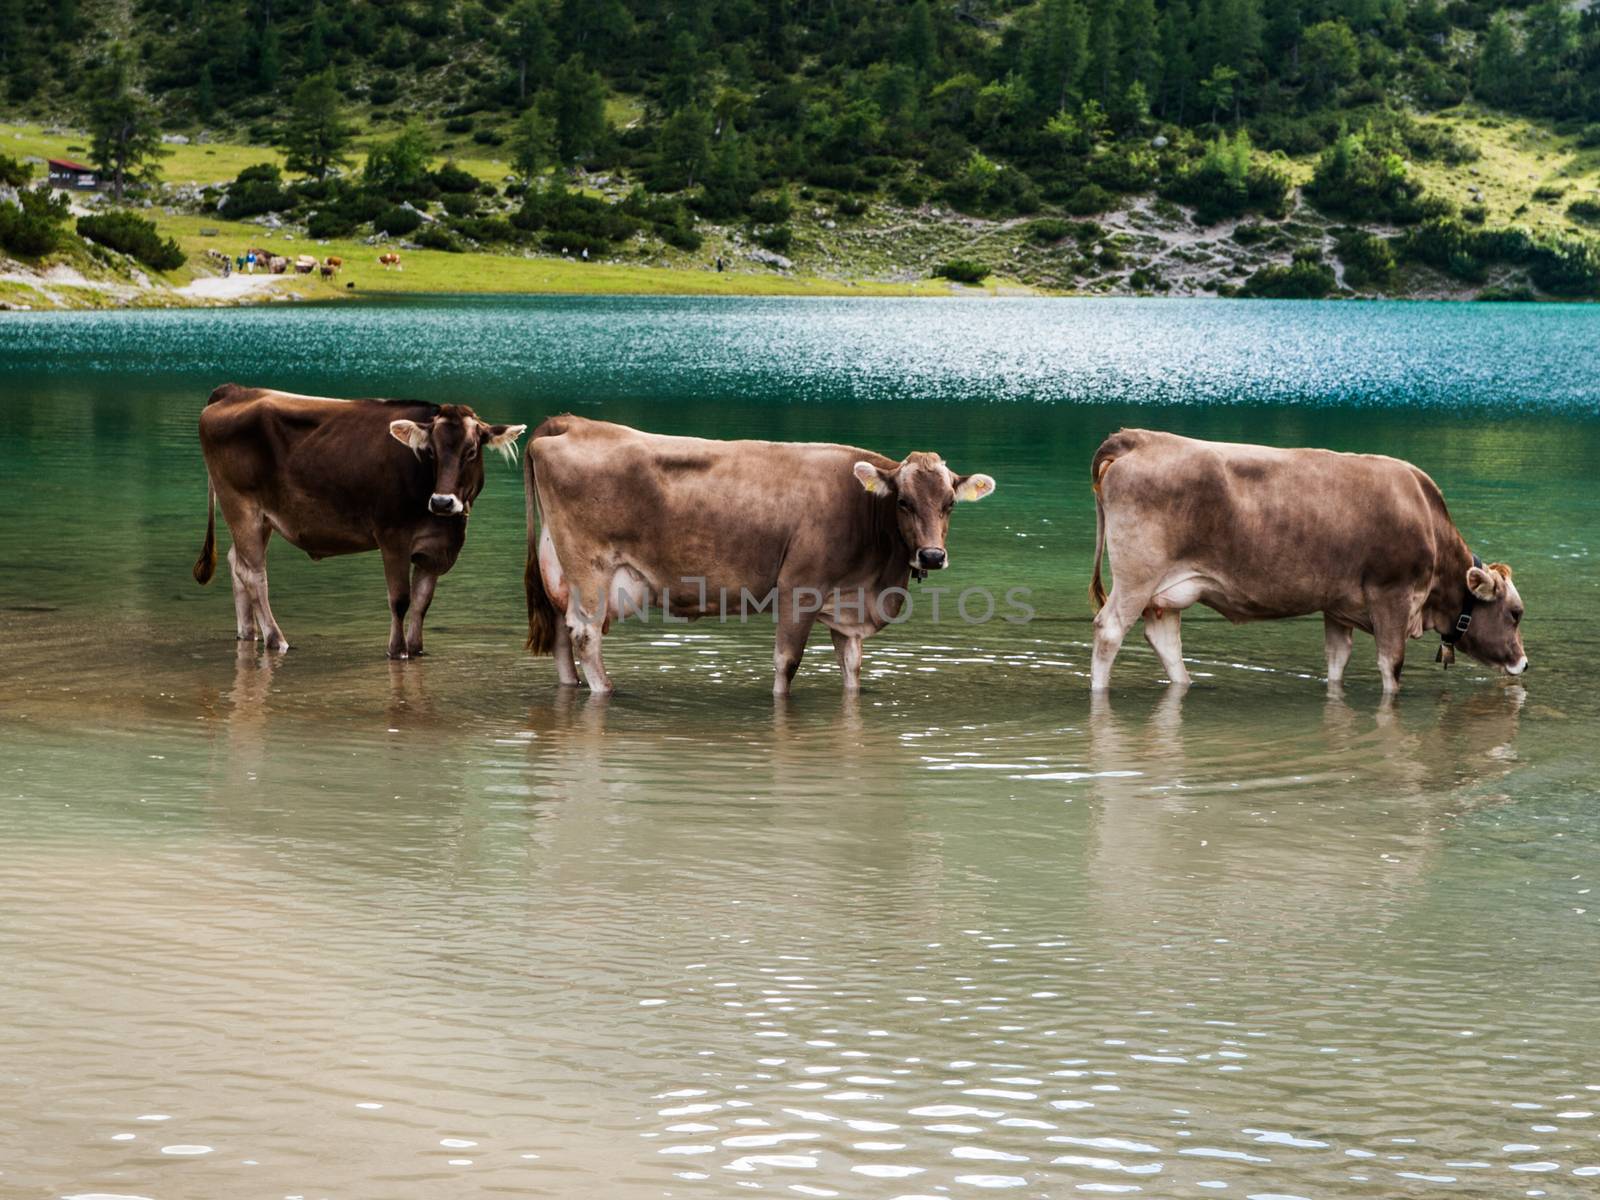 Bathing cows in Tirol (Austria)